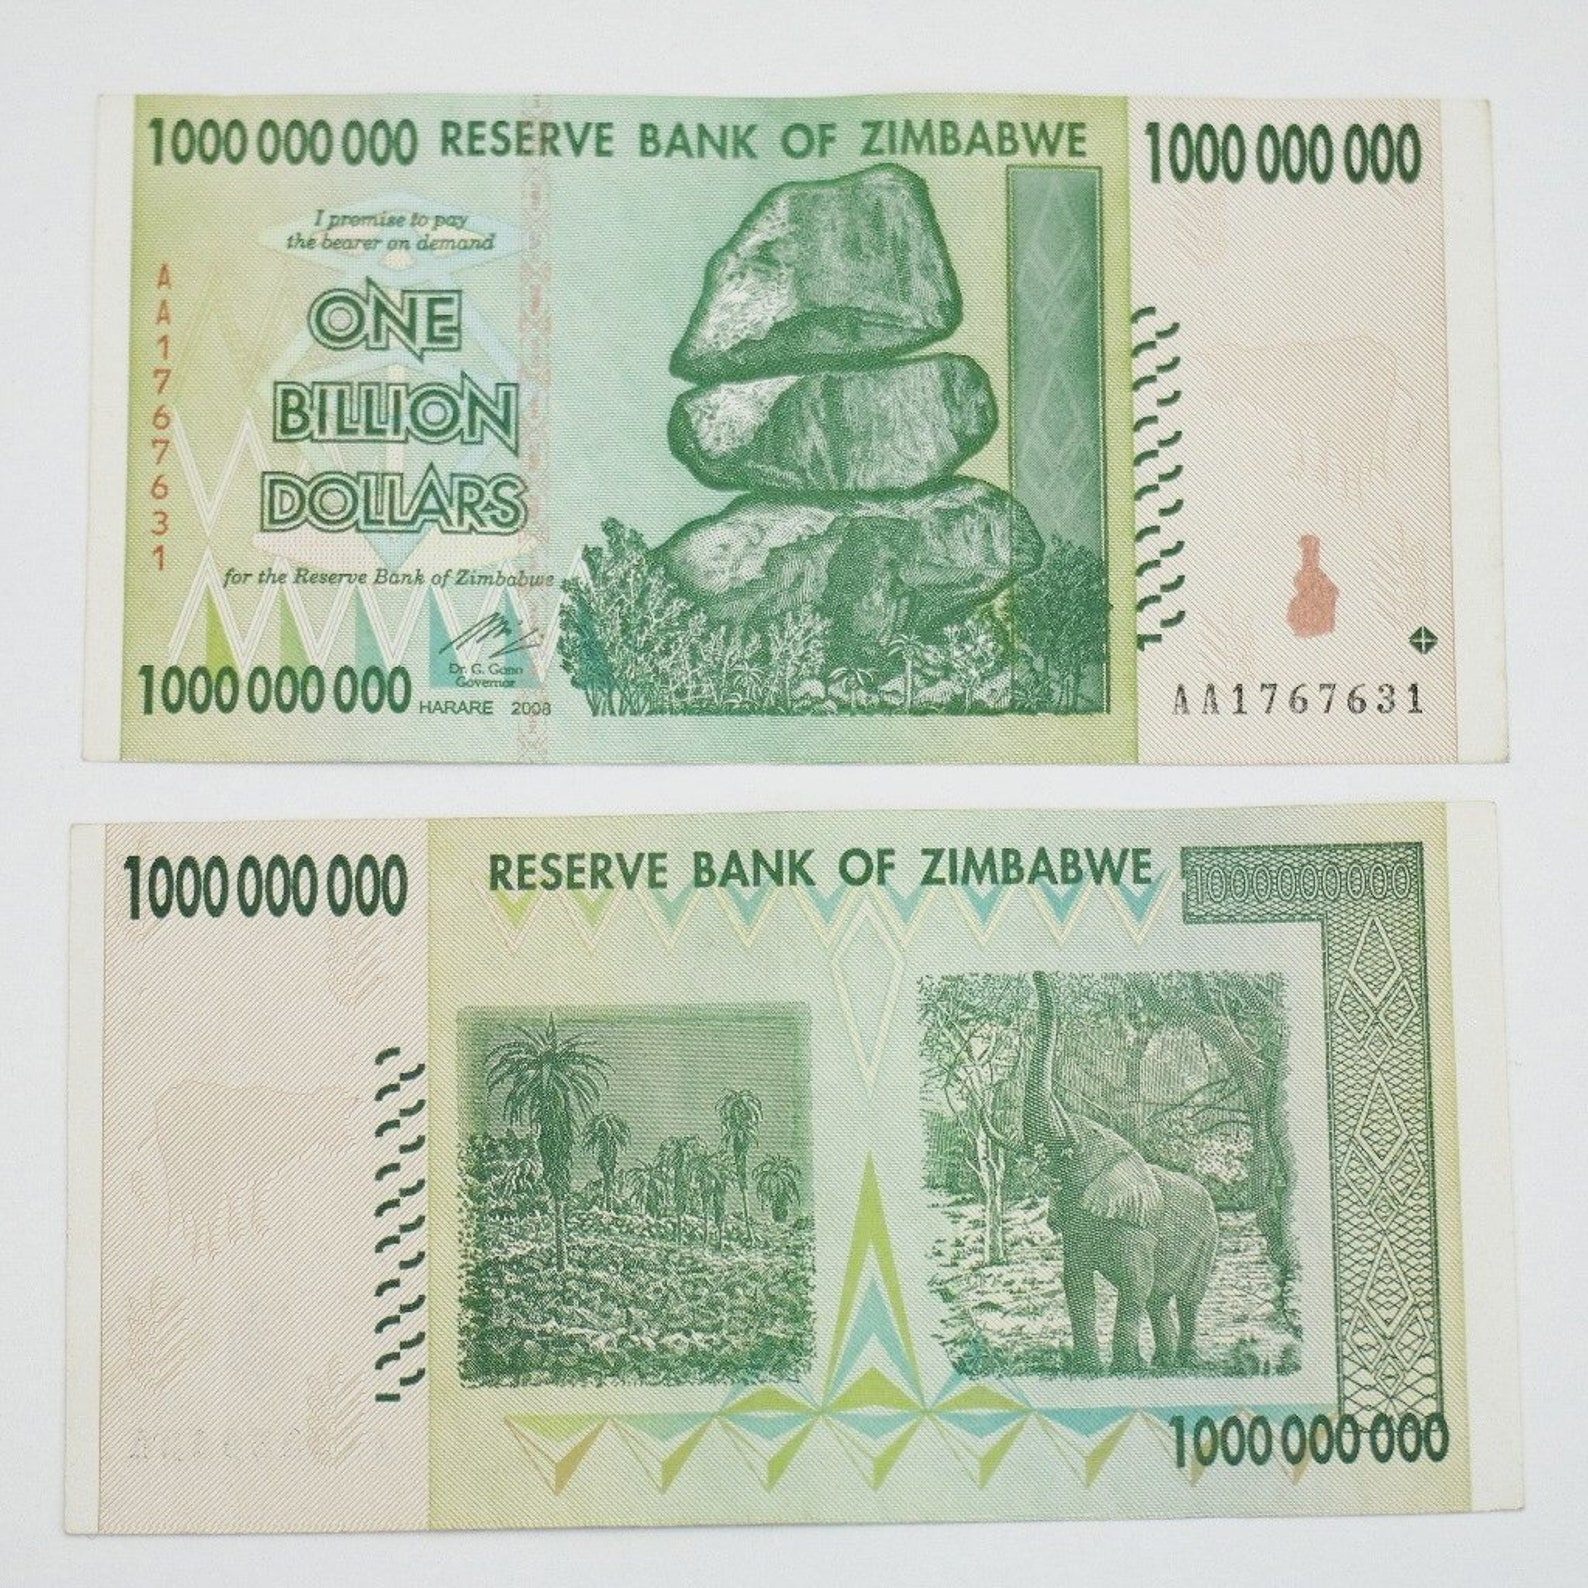 Купюра 1000000000. Купюры Зимбабве. Купюры Зимбабве 2008 года. Доллар Зимбабве. 1000000000 Долларов.